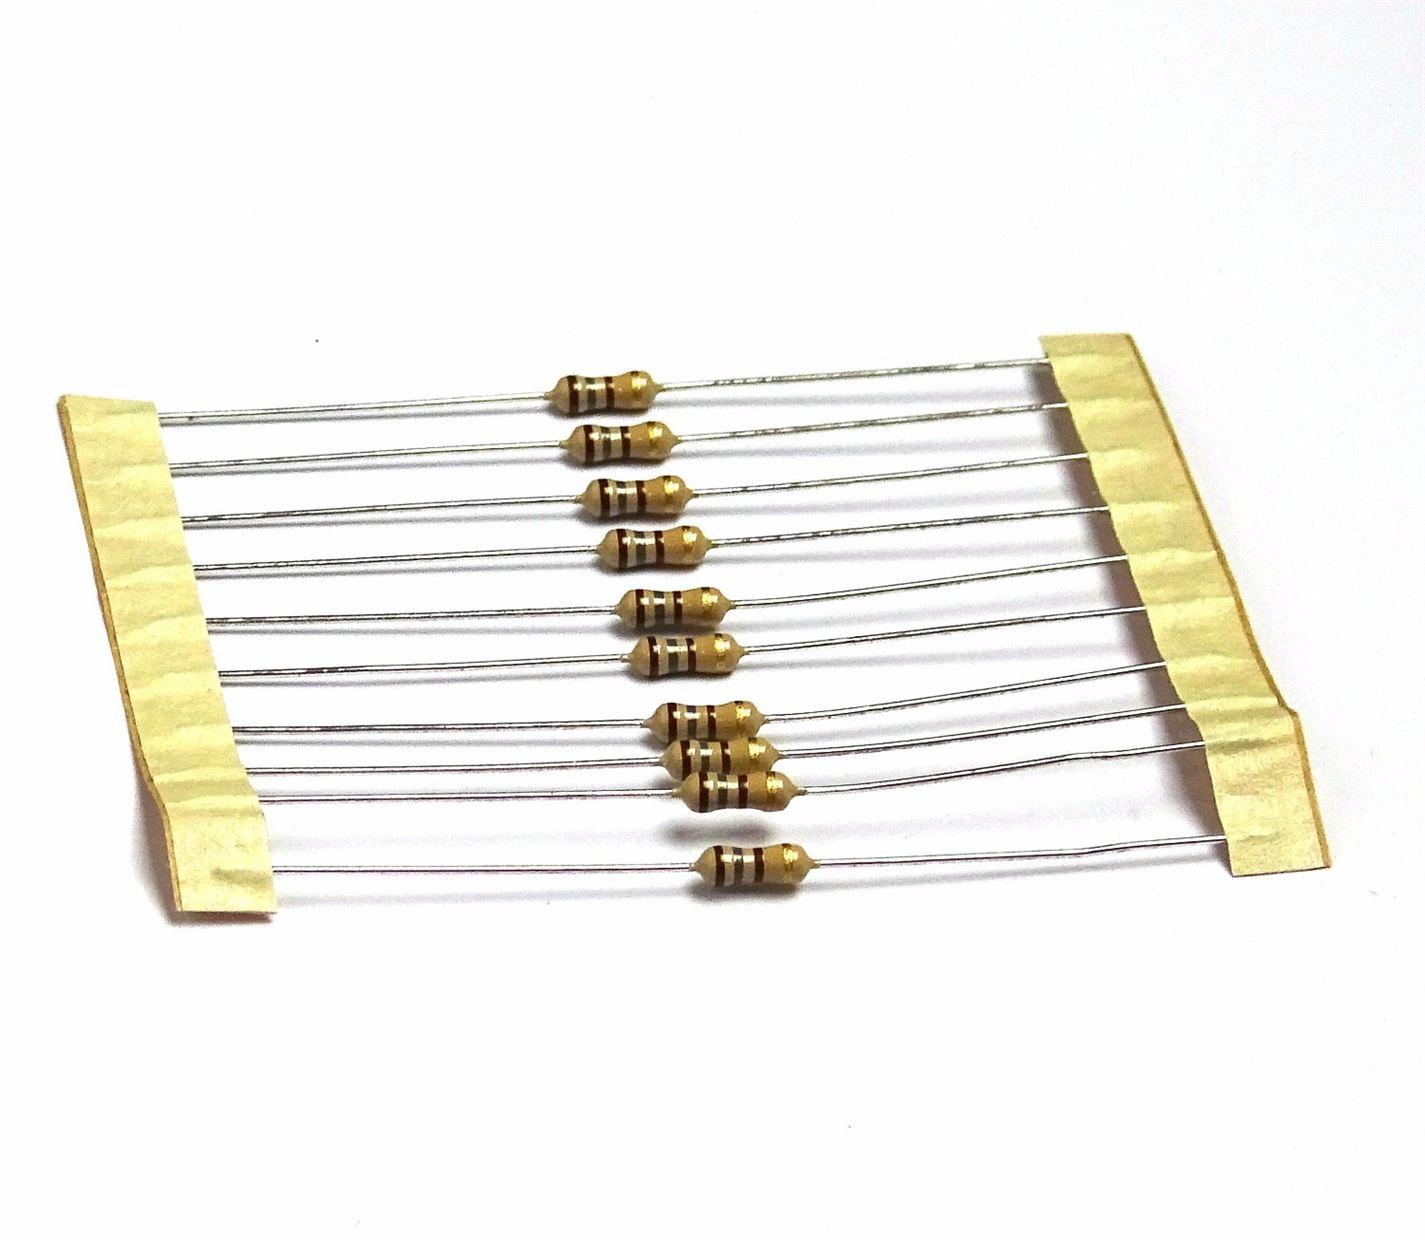 10 x resistors 180 ohm ohms 1/4w 0.25w 5% Carbon Film - UK Seller